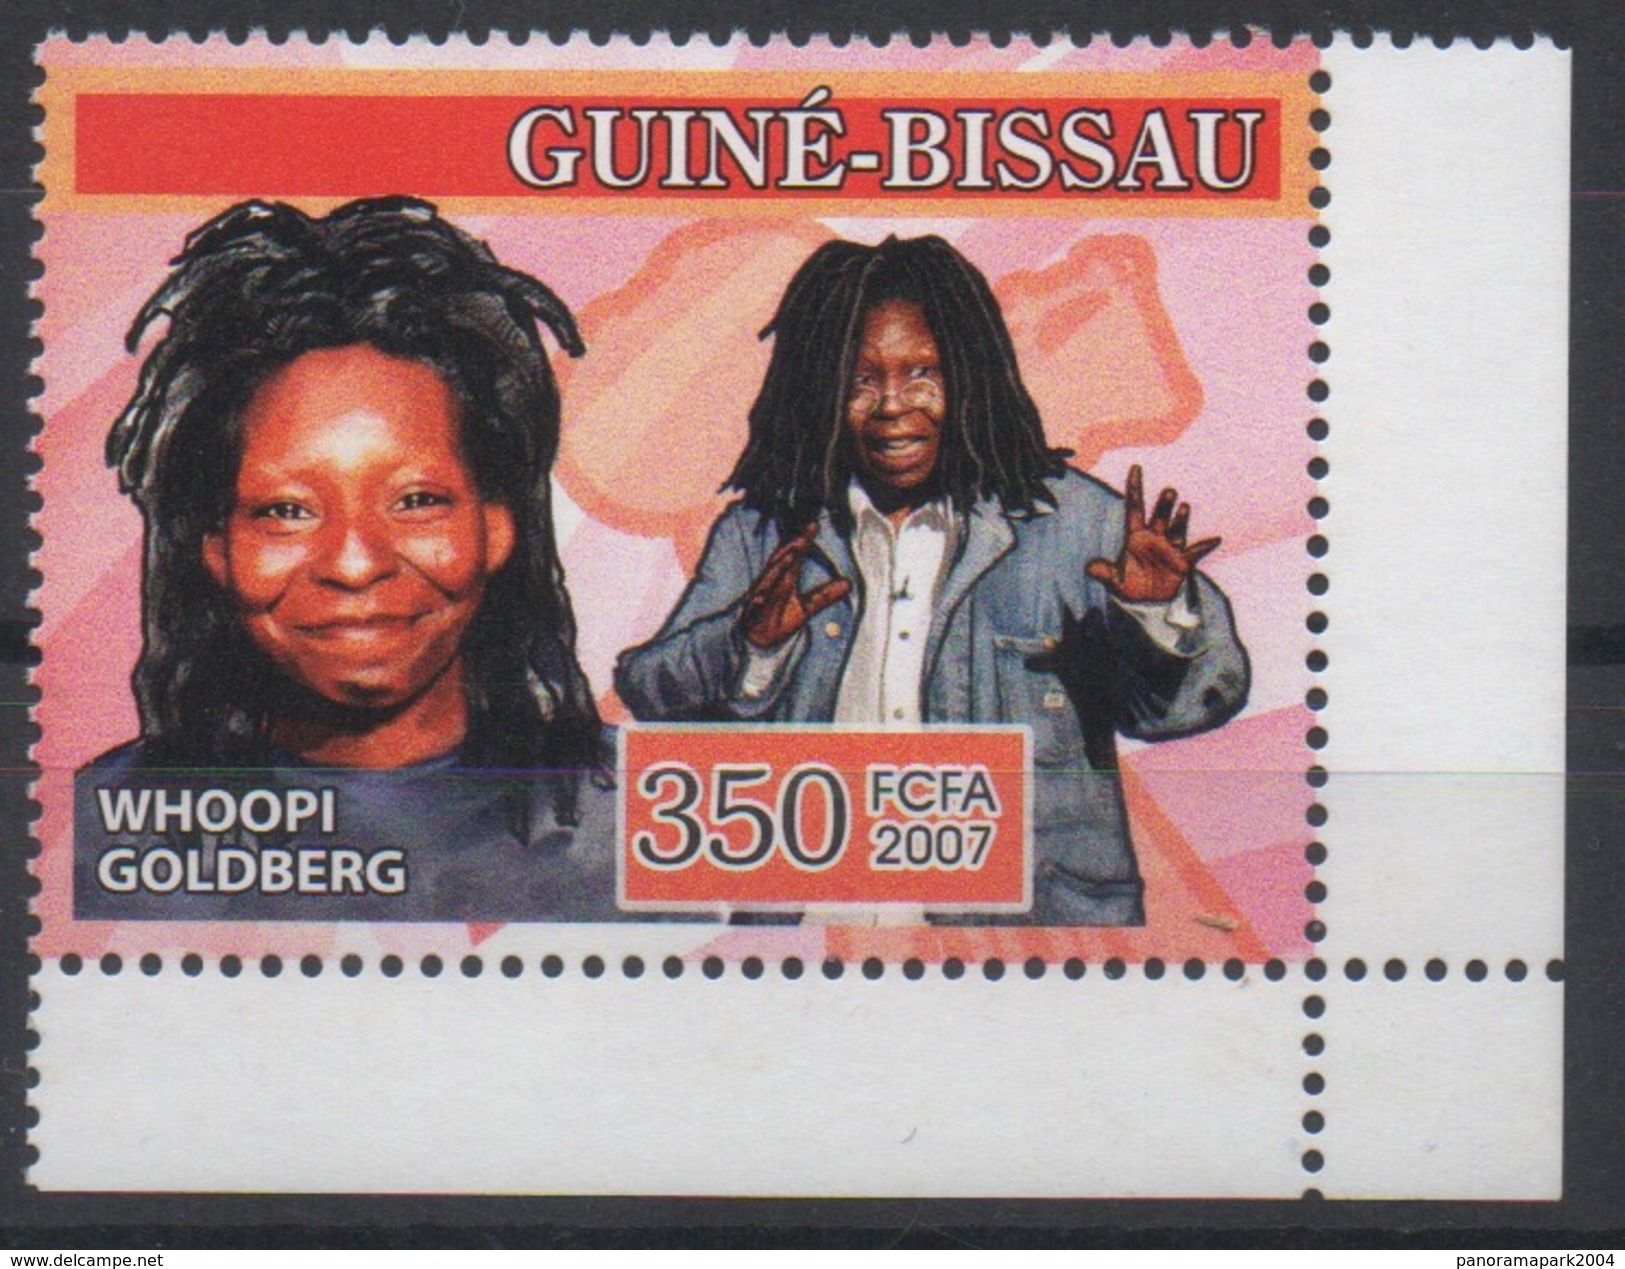 Guiné-Bissau Guinea Guinée Bissau 2007 Mi. 3461 Whoopi Goldberg Actor Schauspielerin Actrice Cinema Hollywood - Guinea-Bissau